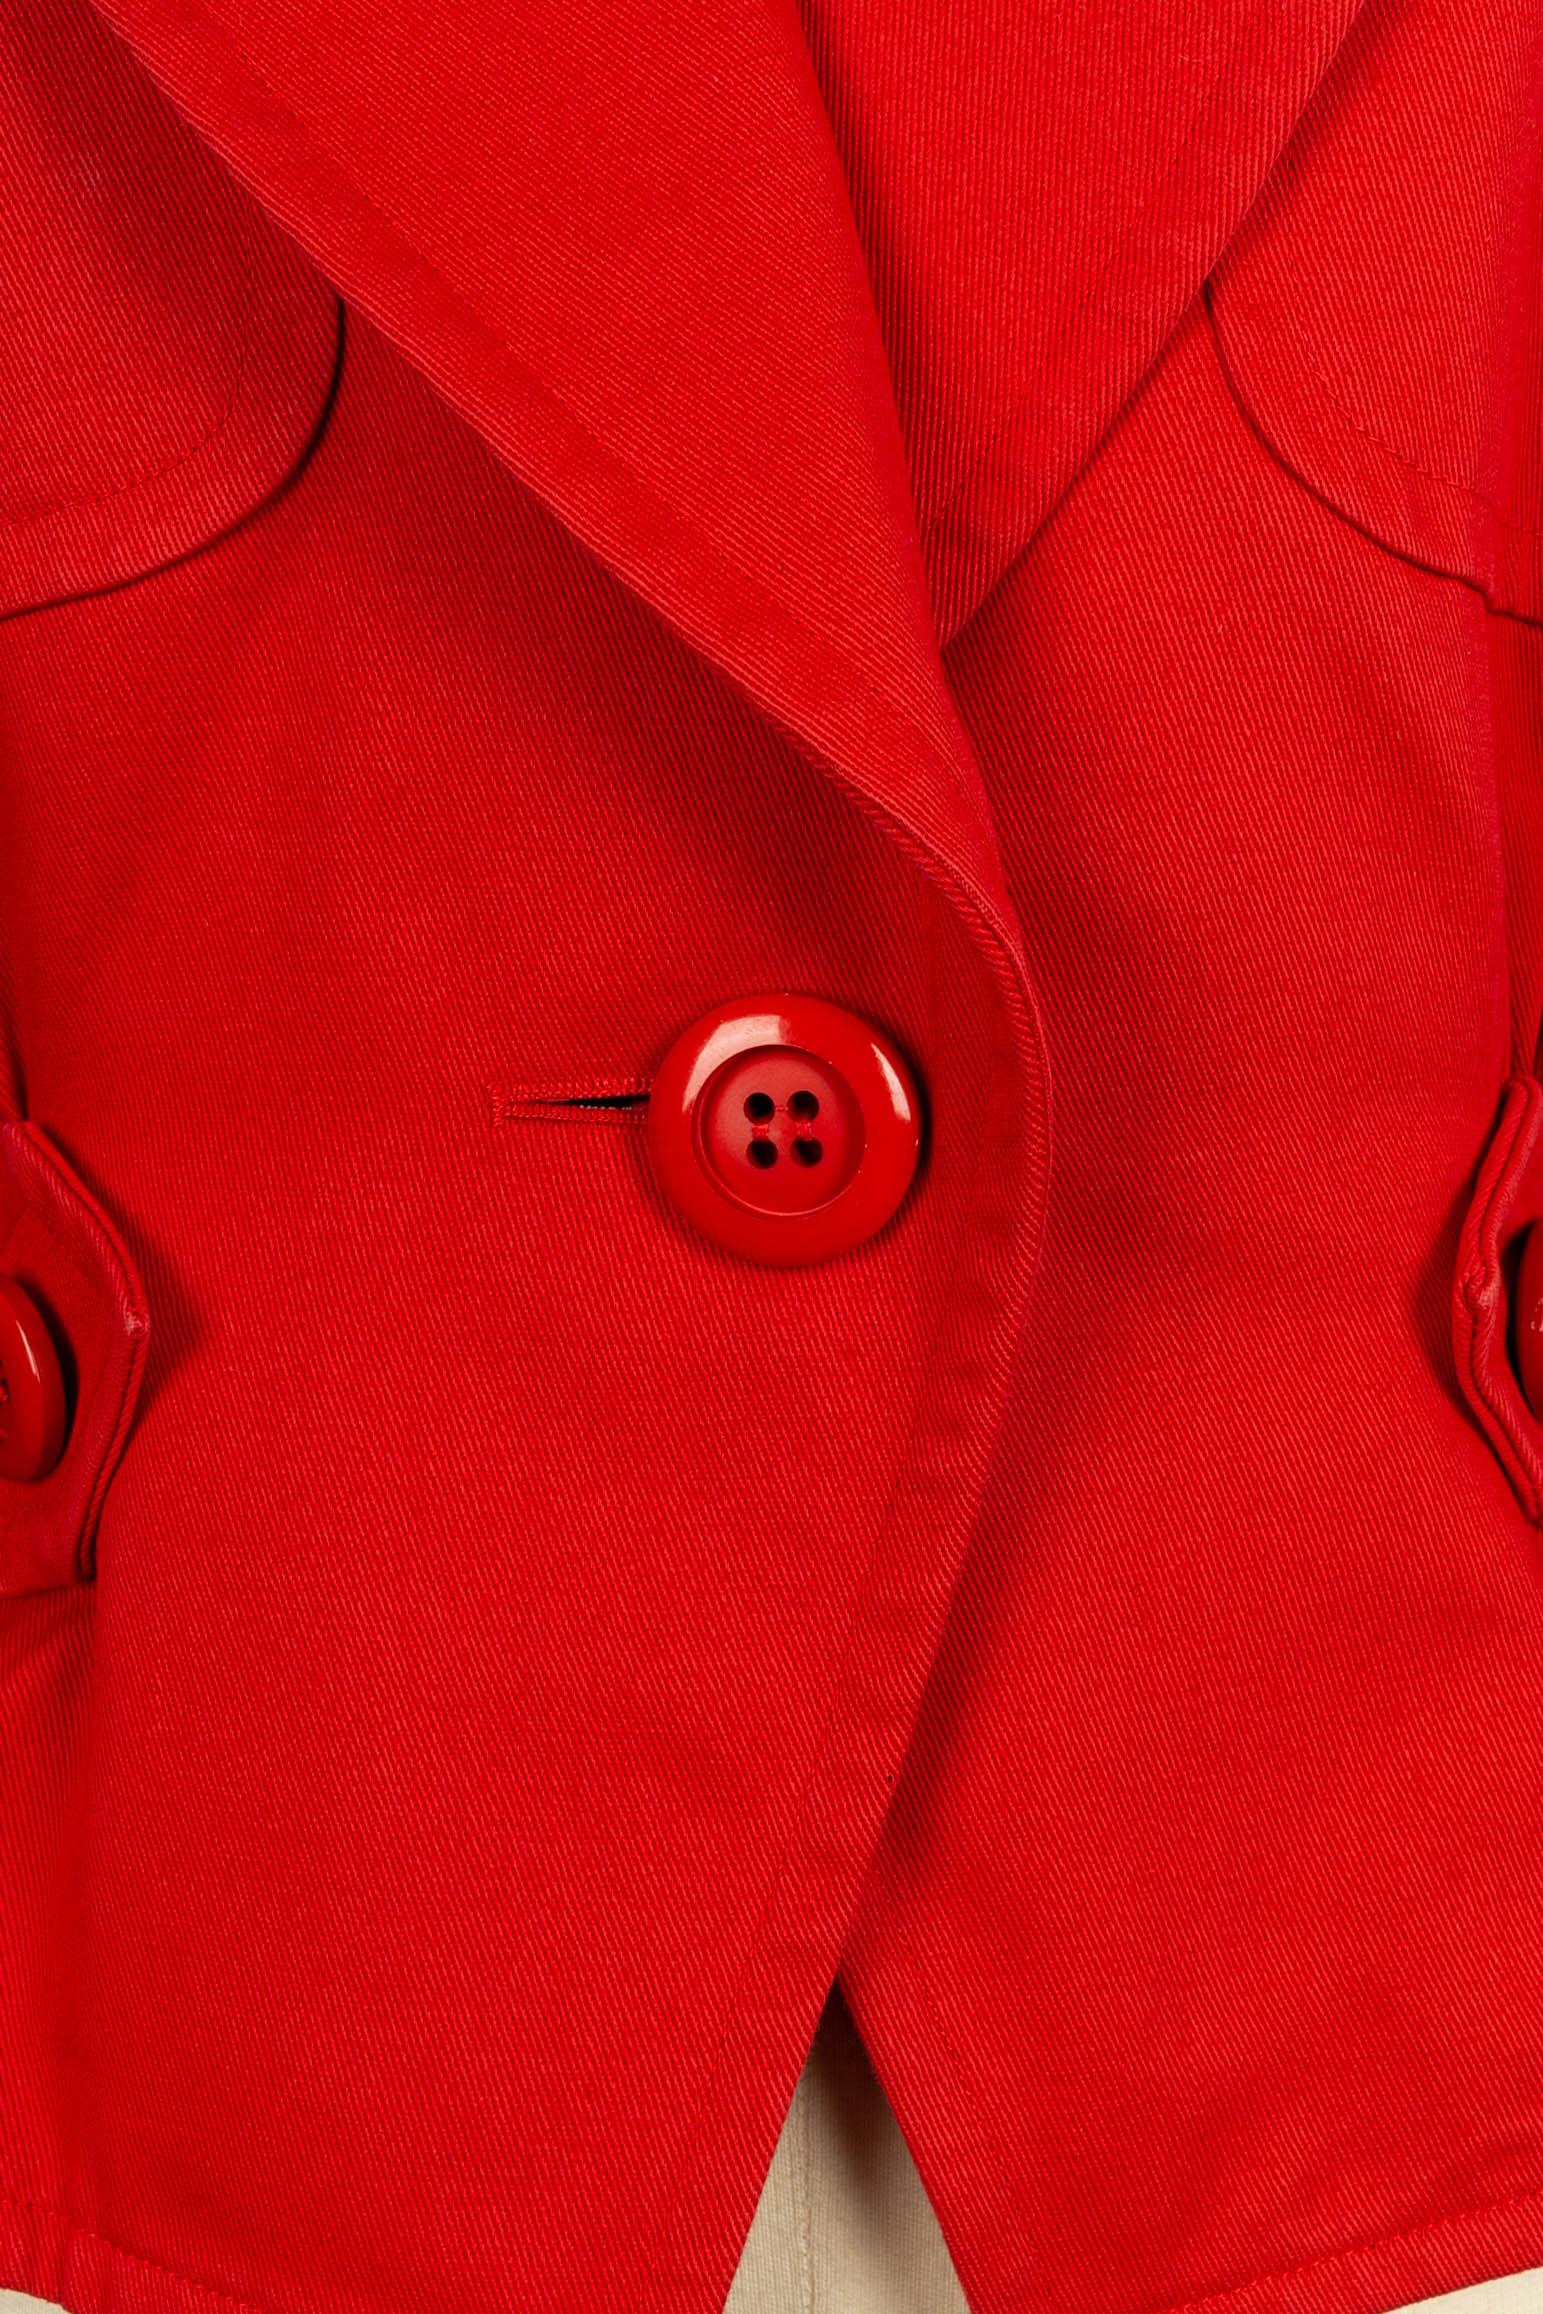 Yves Saint Laurent Red Cotton Short Jacket For Sale 2